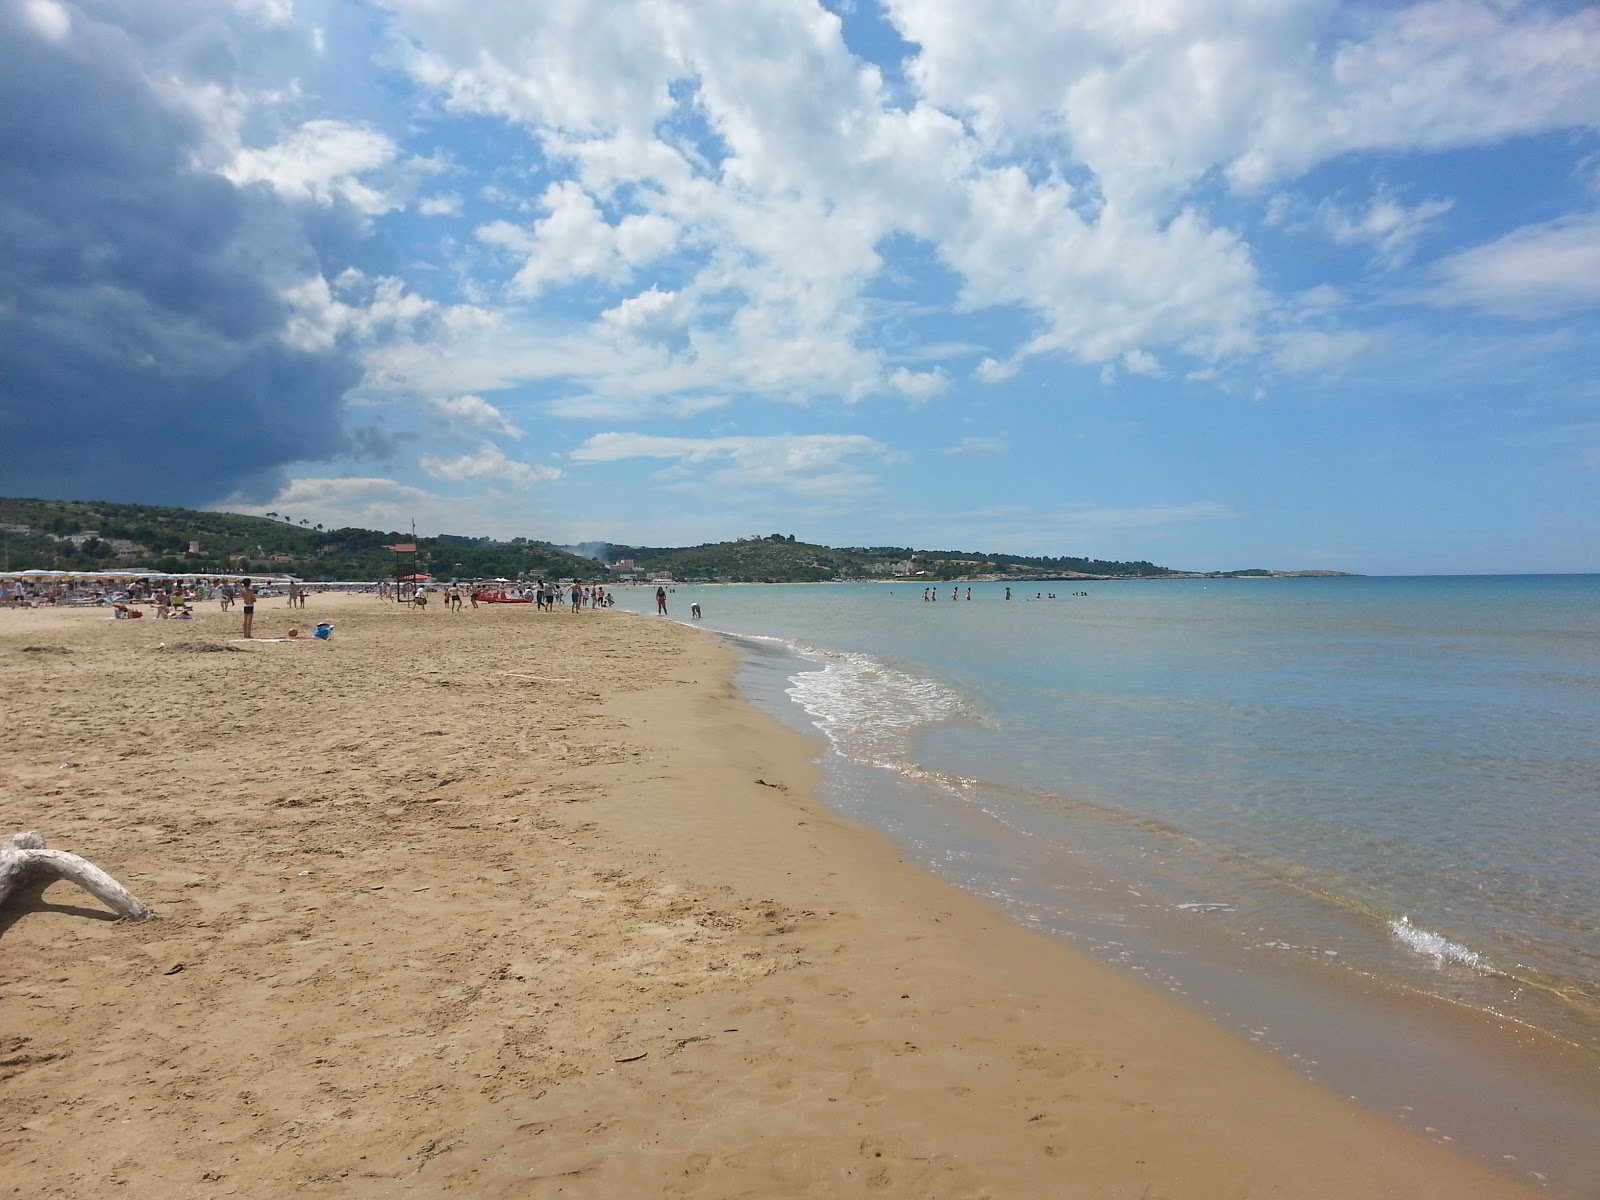 Foto de Spiaggia di San Lorenzo - recomendado para viajeros en familia con niños